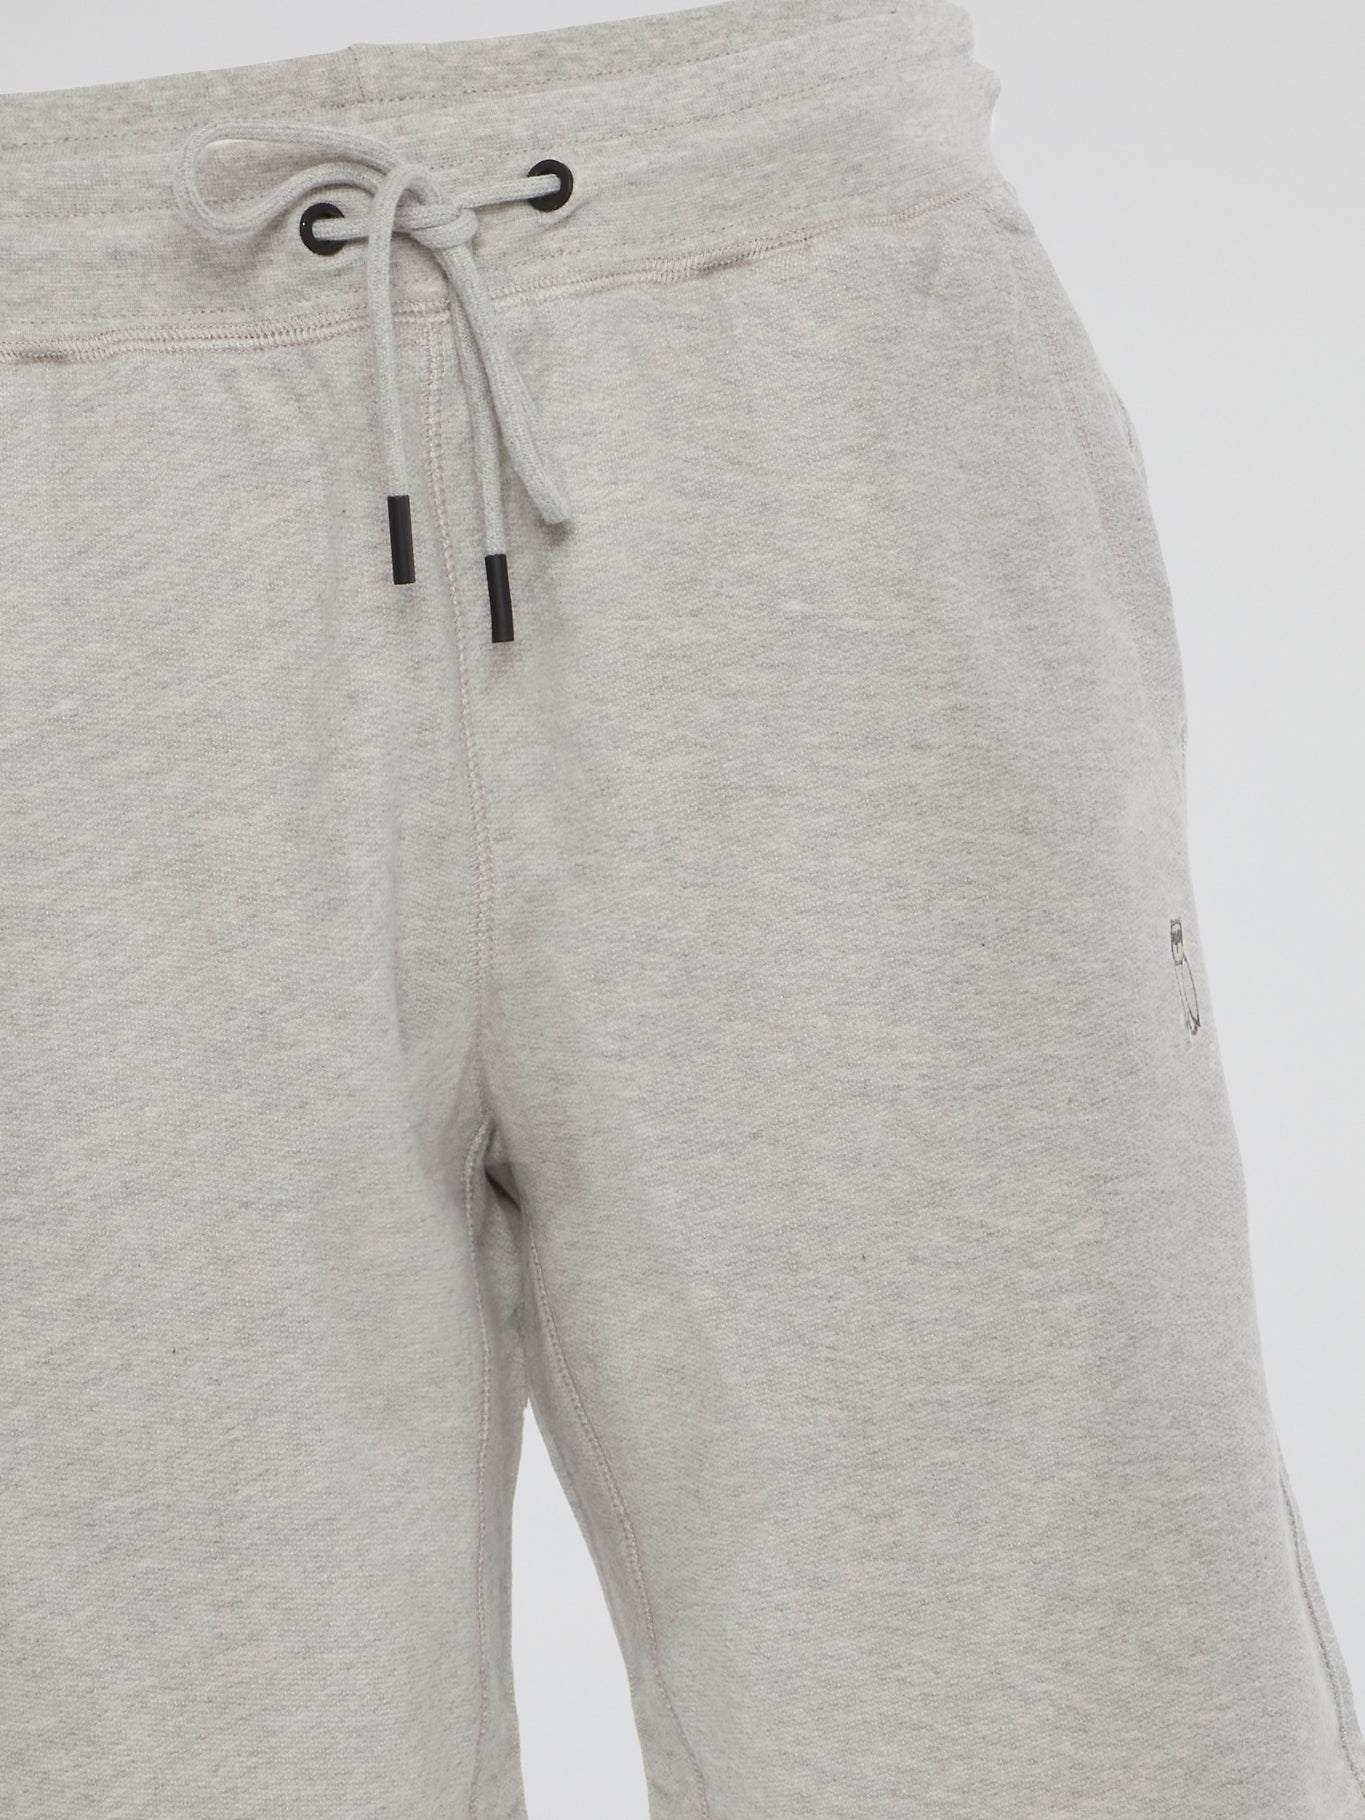 Grey Essentials Sweat Shorts – Maison-B-More Global Store